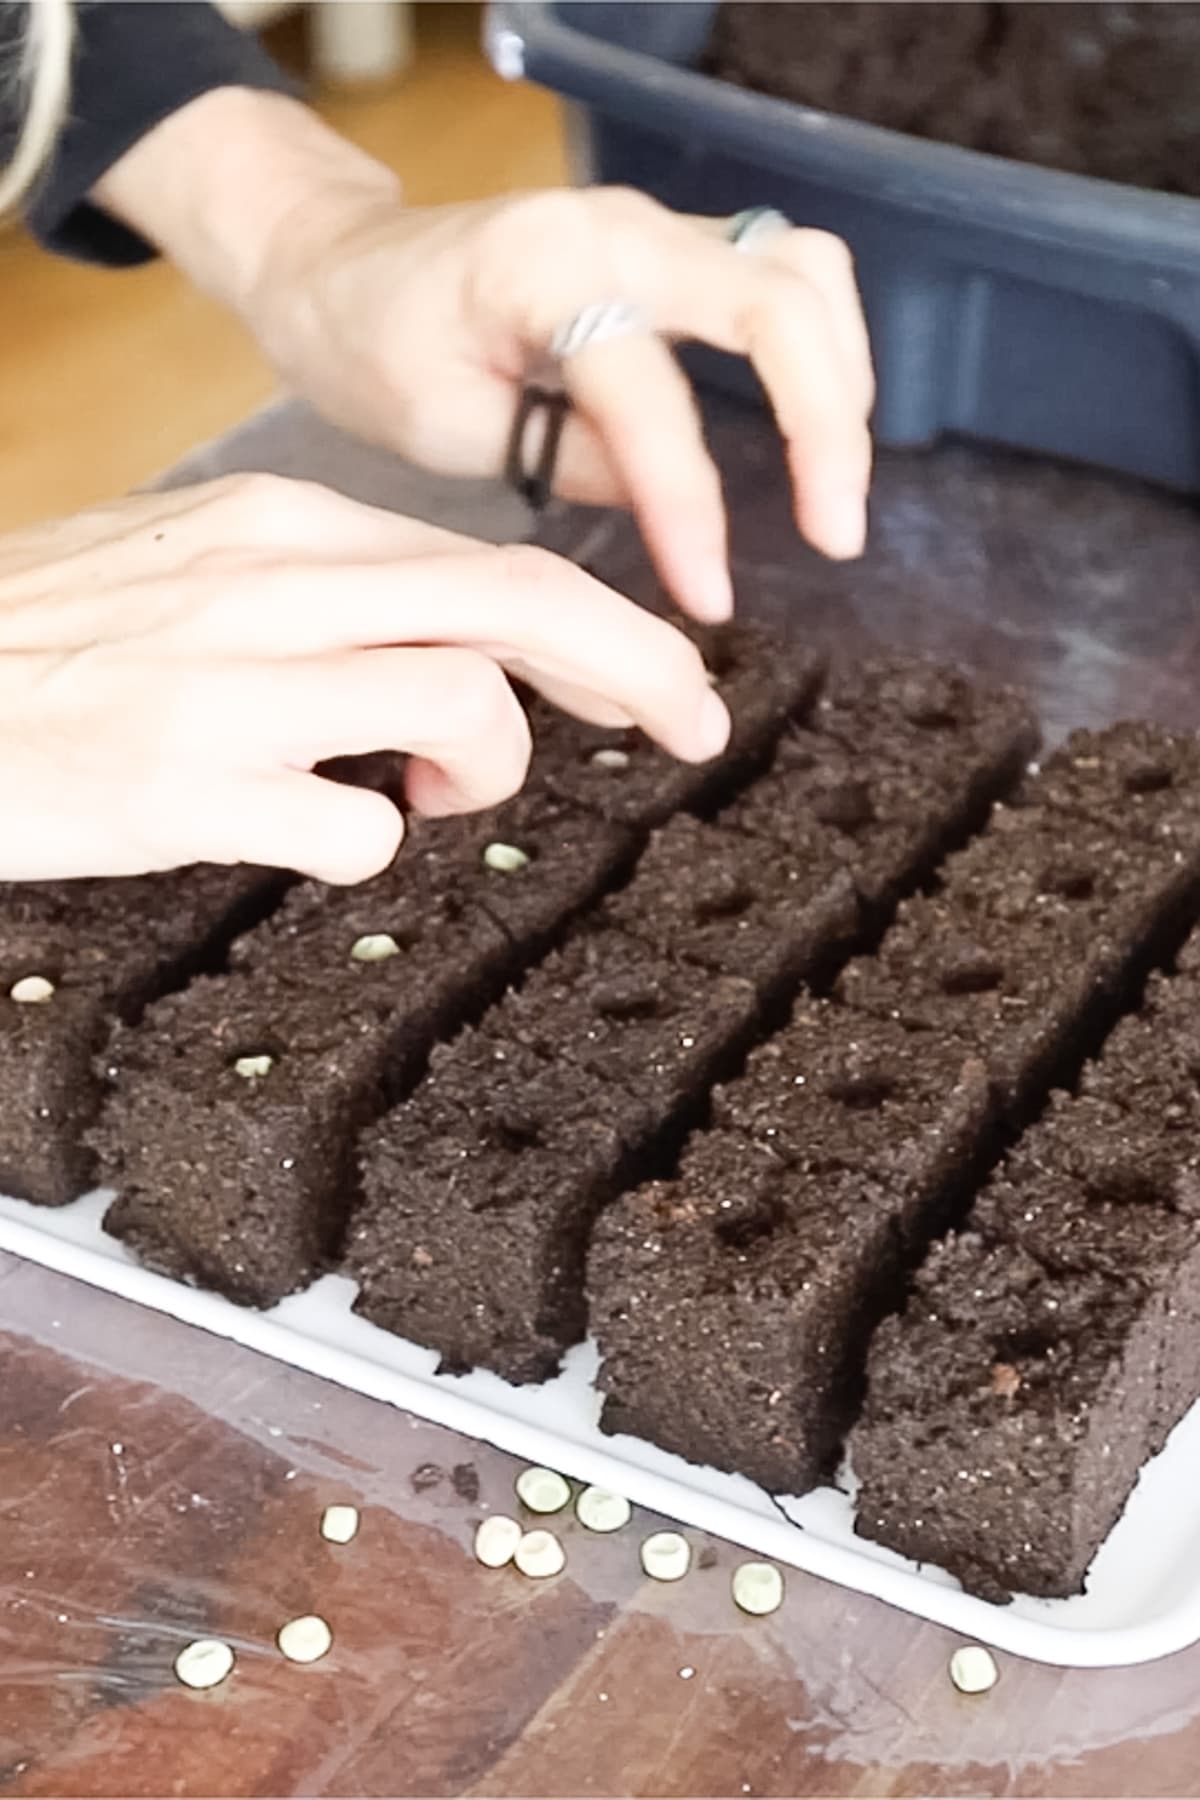 planting seeds in soil blocks